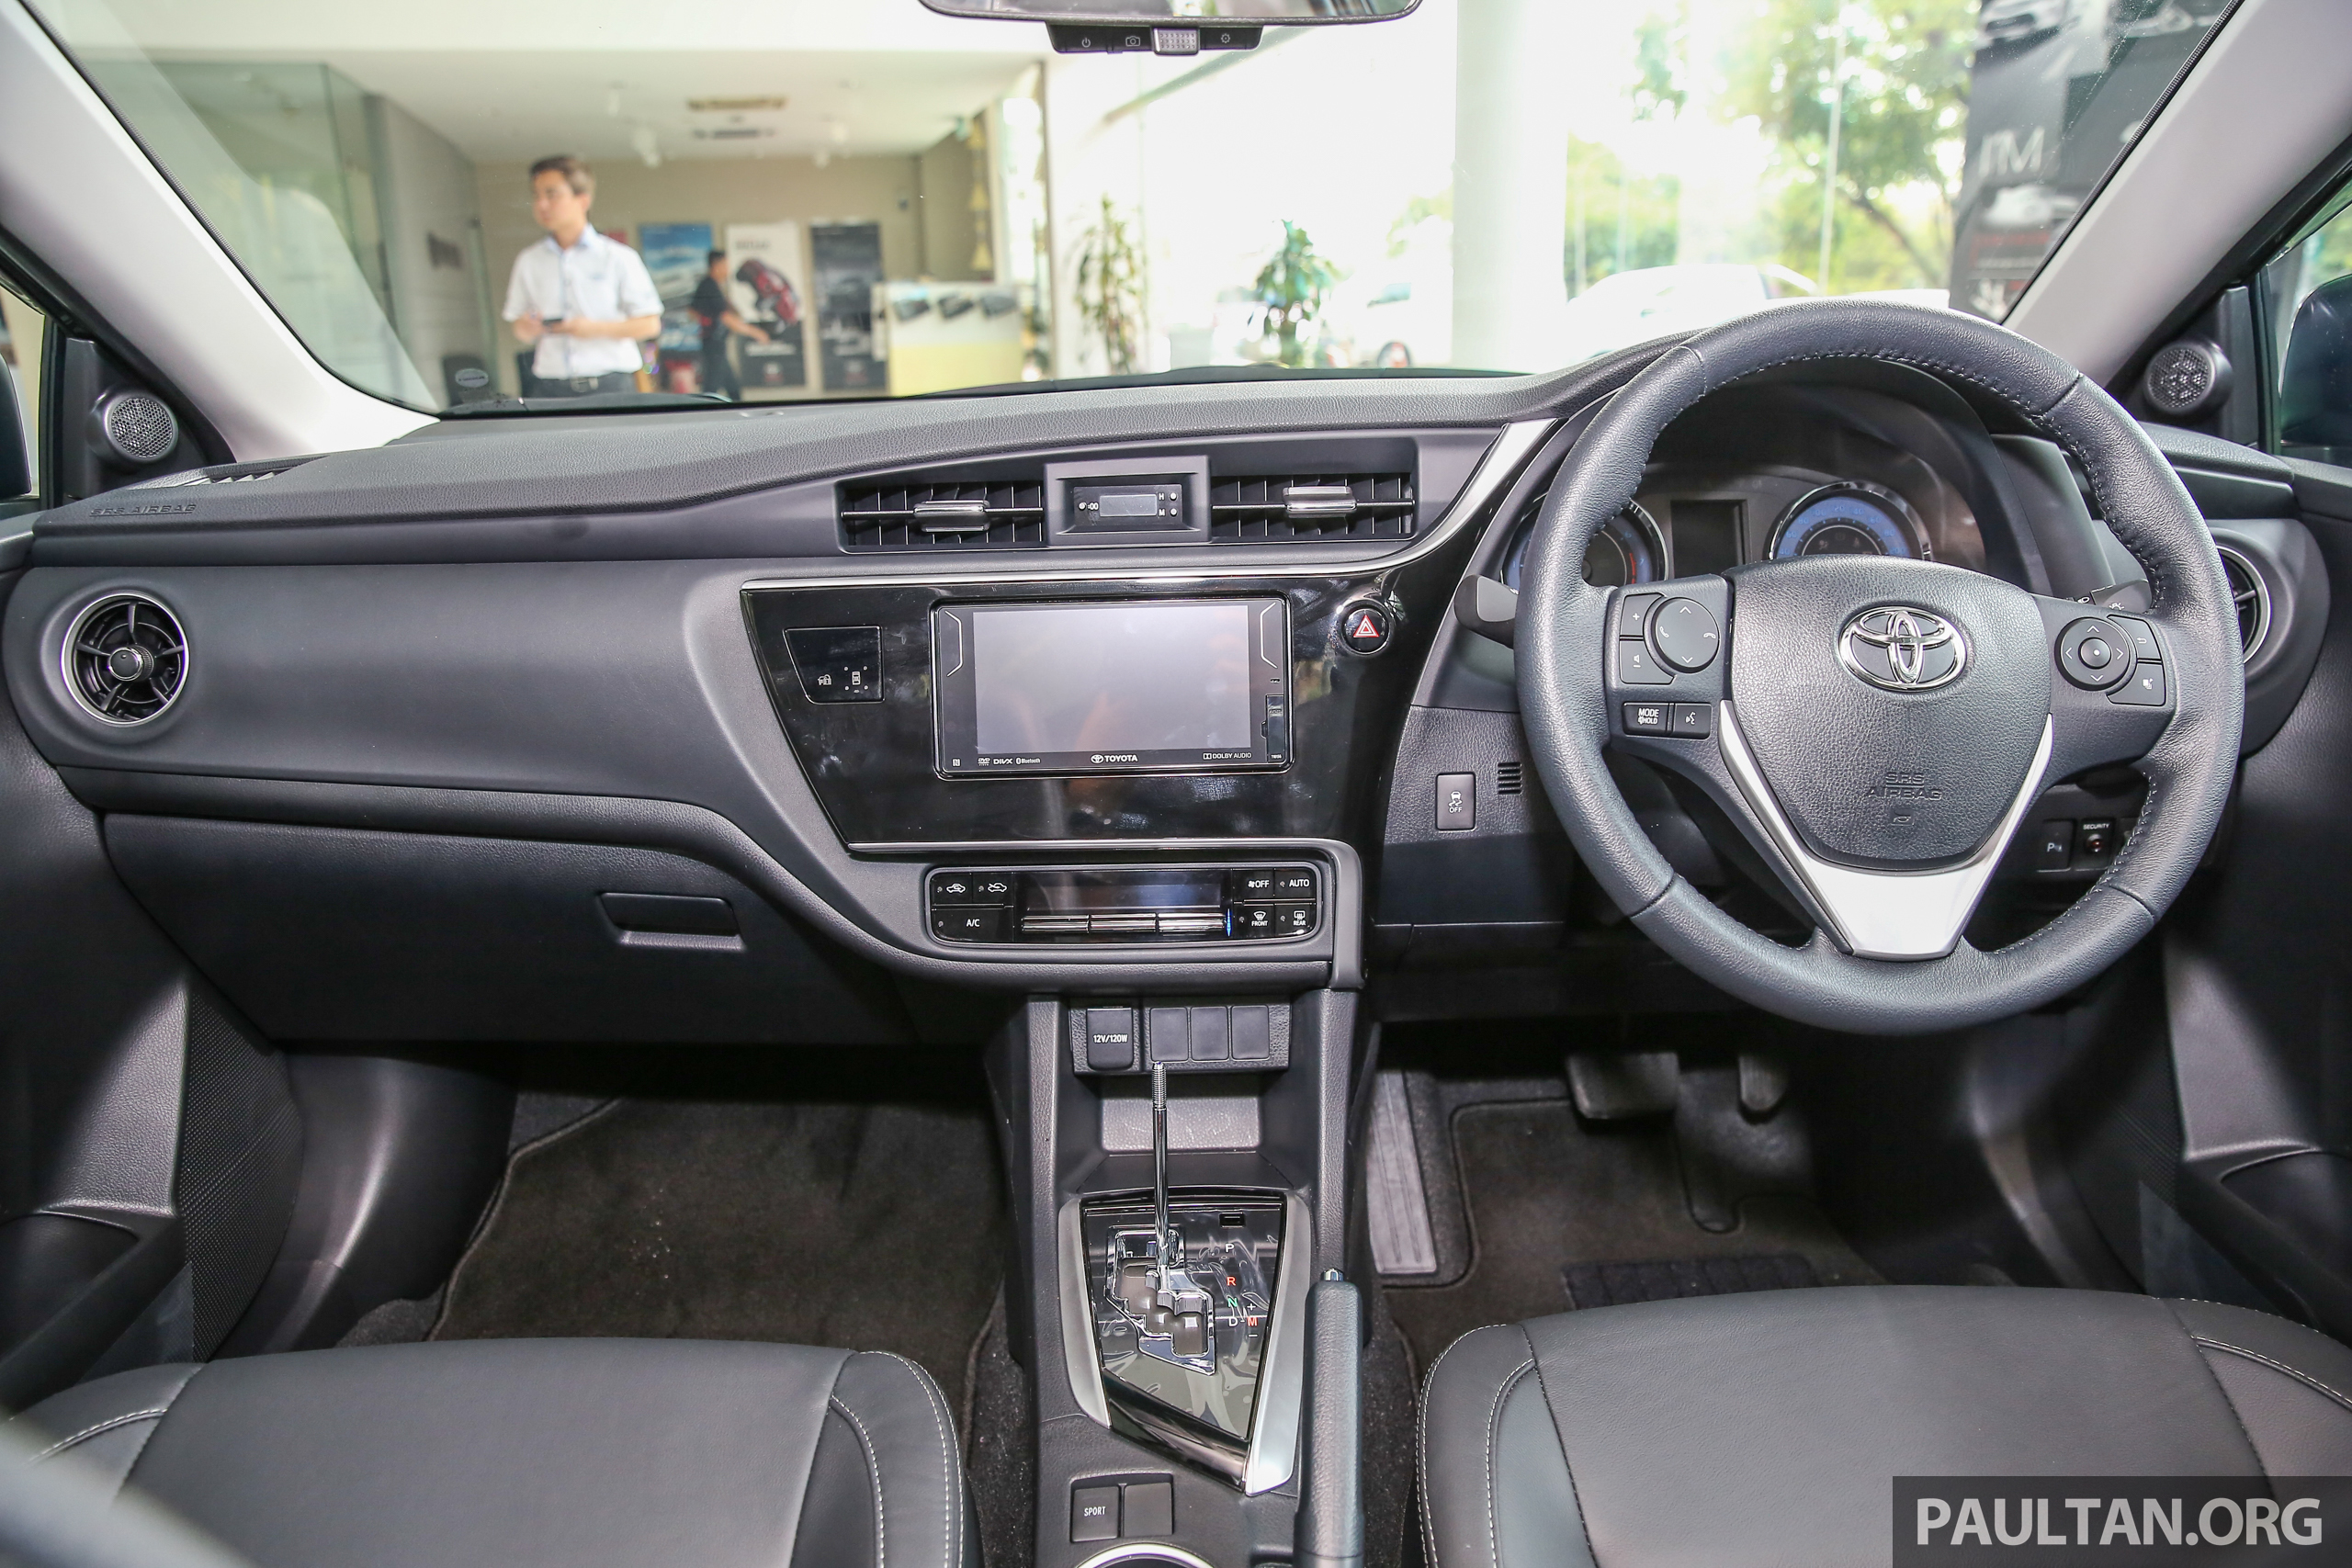 New Toyota Corolla Altis 1.8G (facelift) interior dashboard